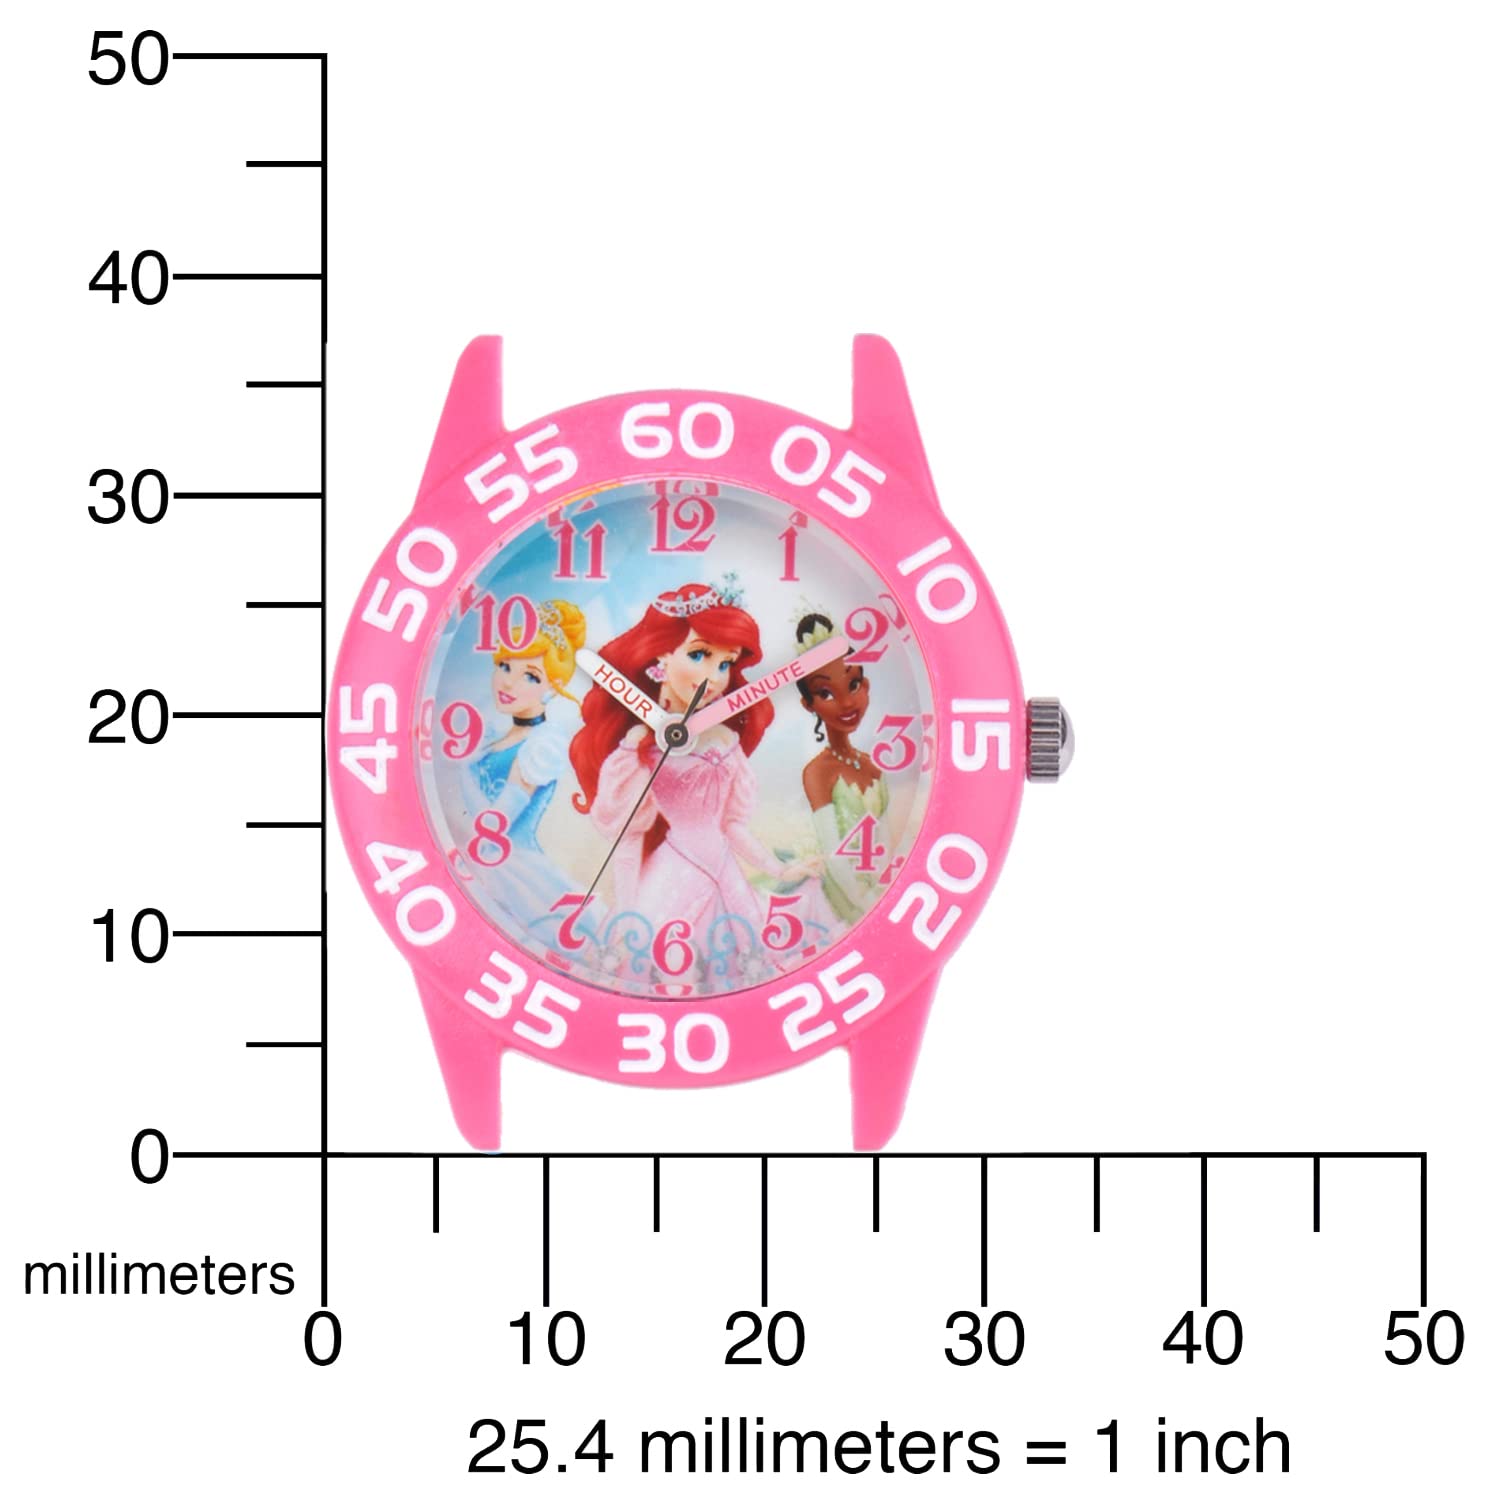 Dsiney Princess Kids' Plastic Time Teacher Analog Quartz Nylon Strap Watch